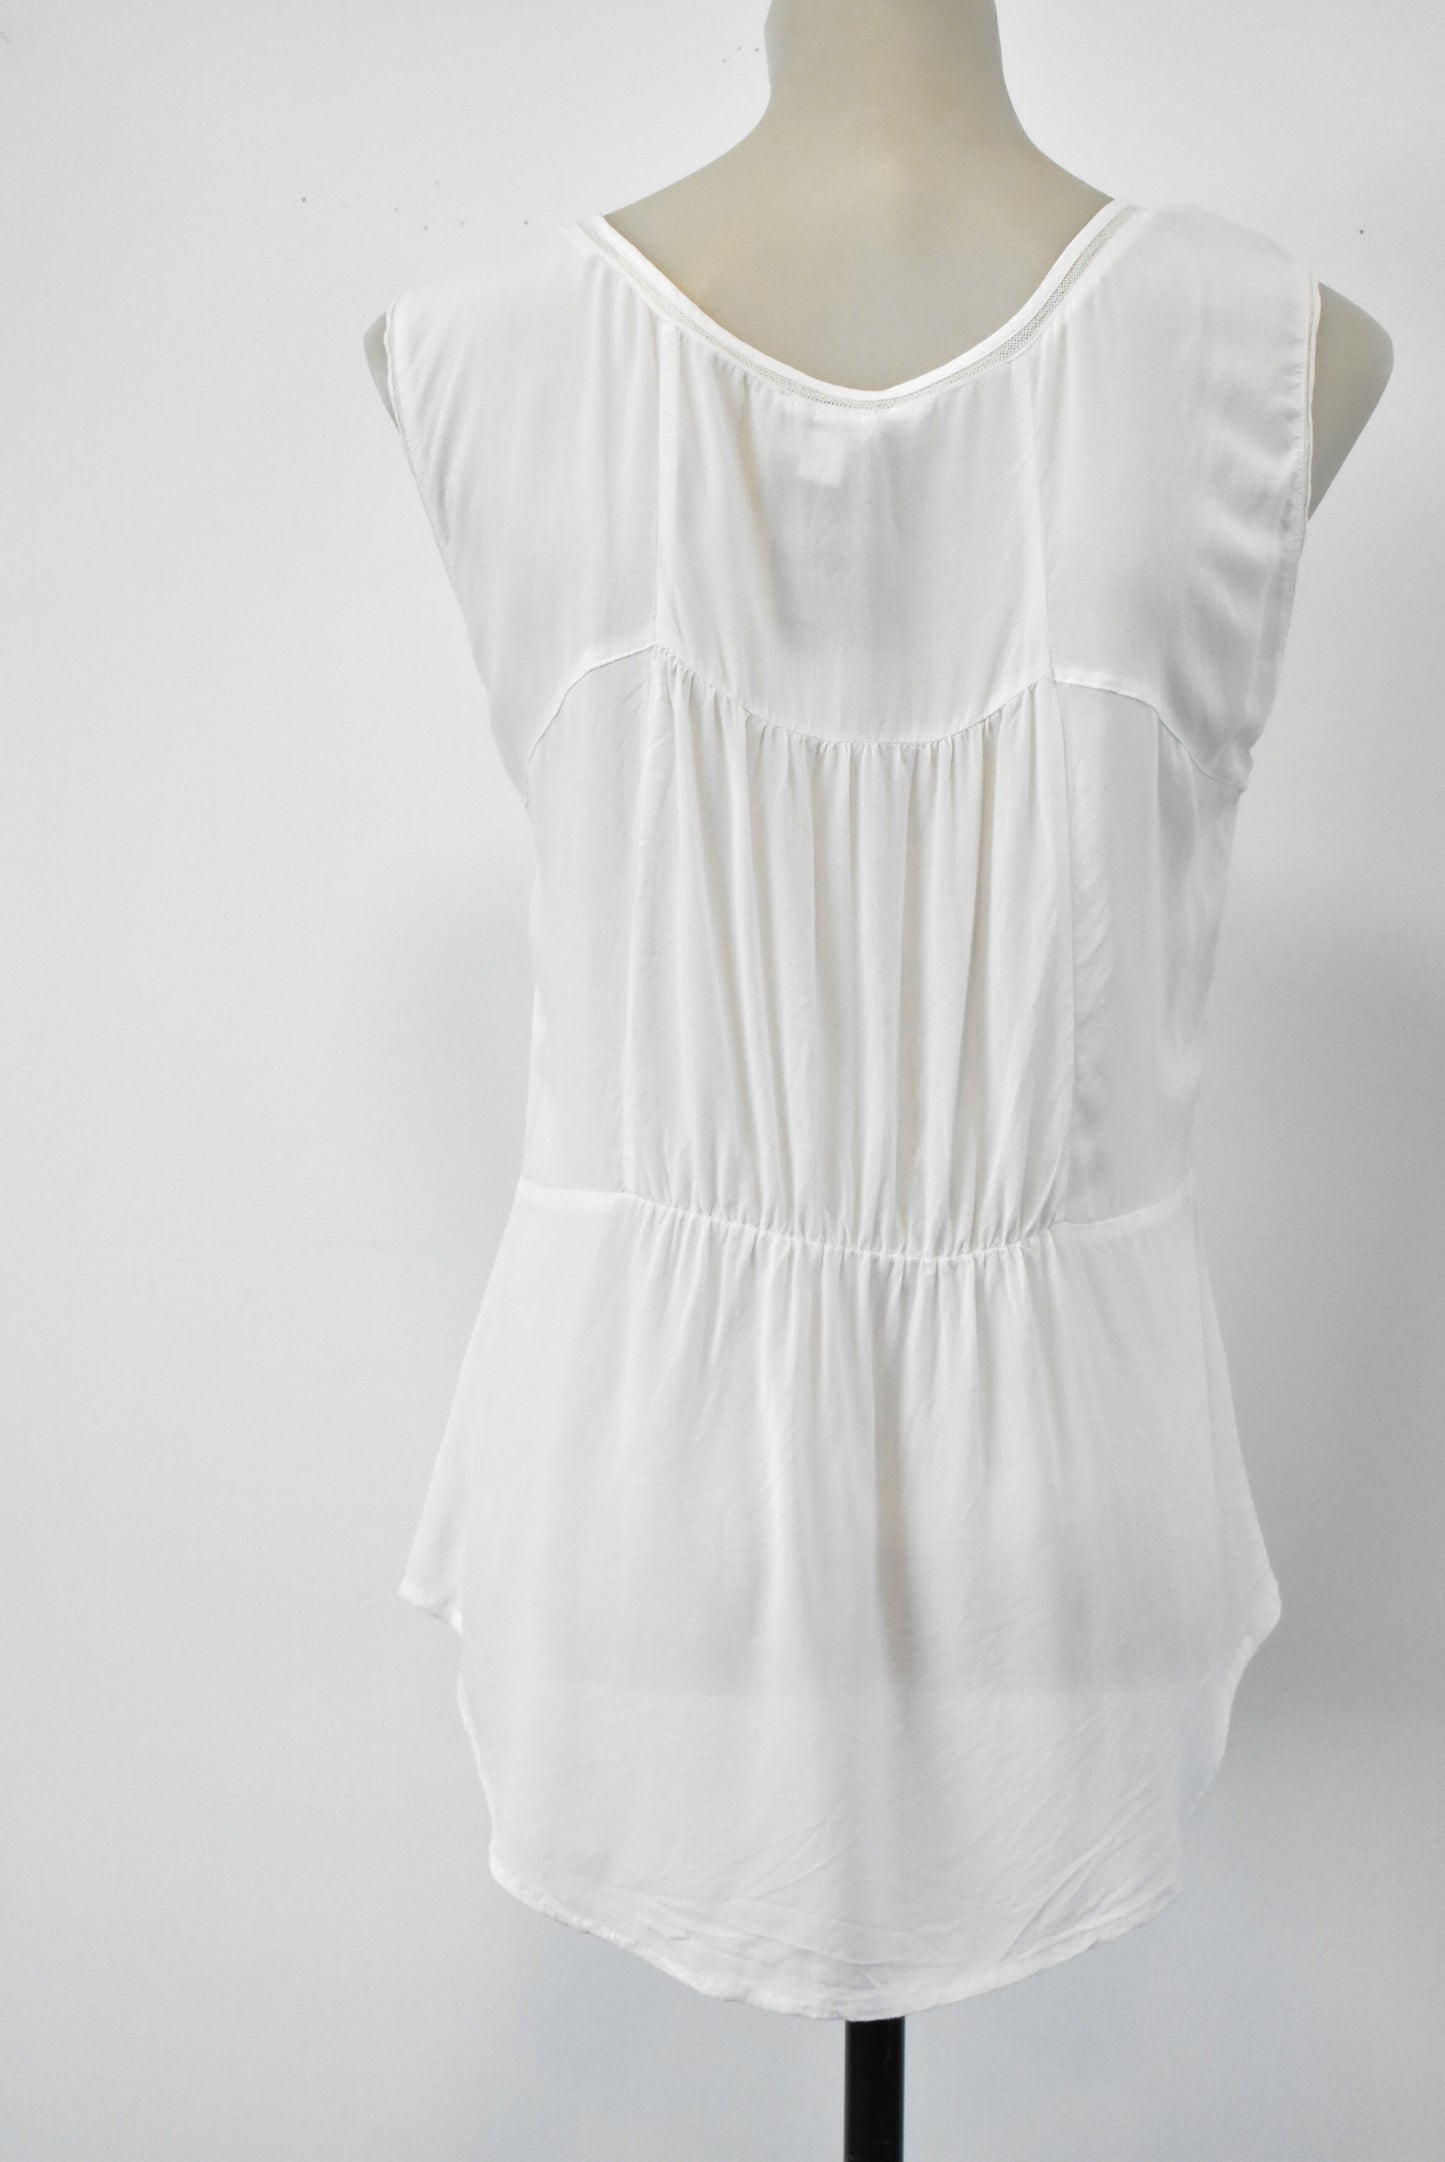 'Witchery' white sleeveless top, size XS